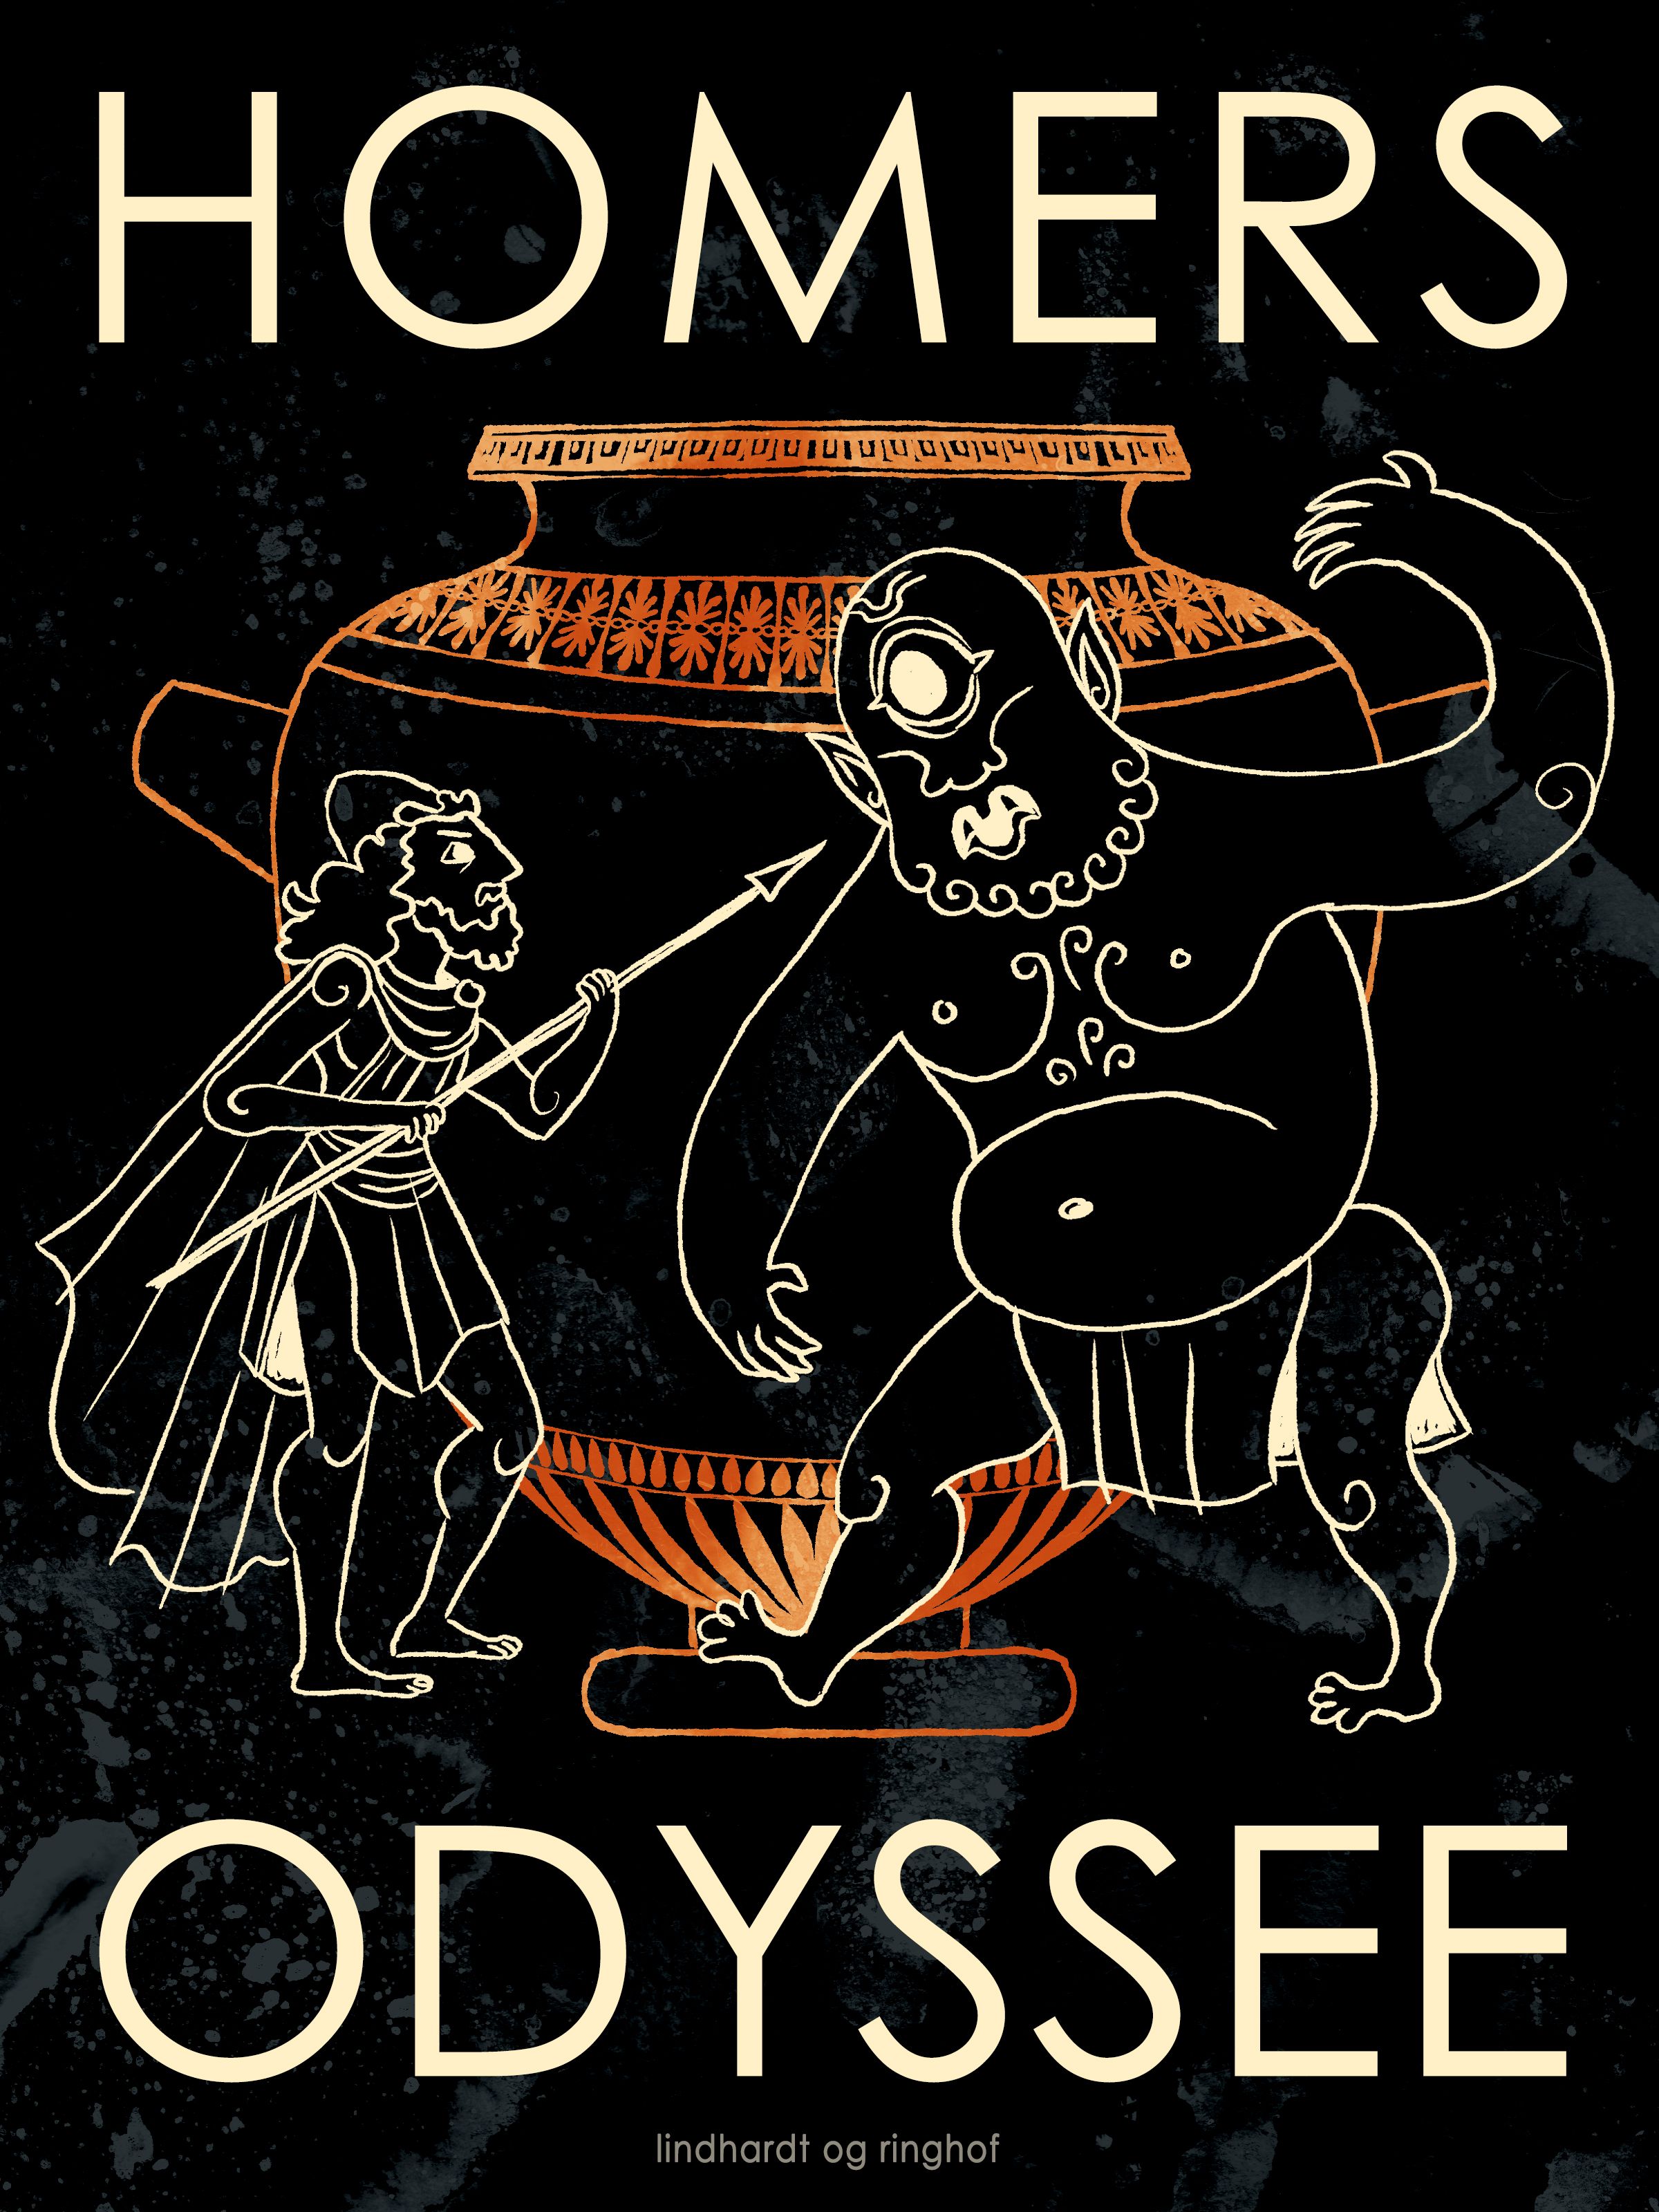 Homers Odyssee, eBook by Homer